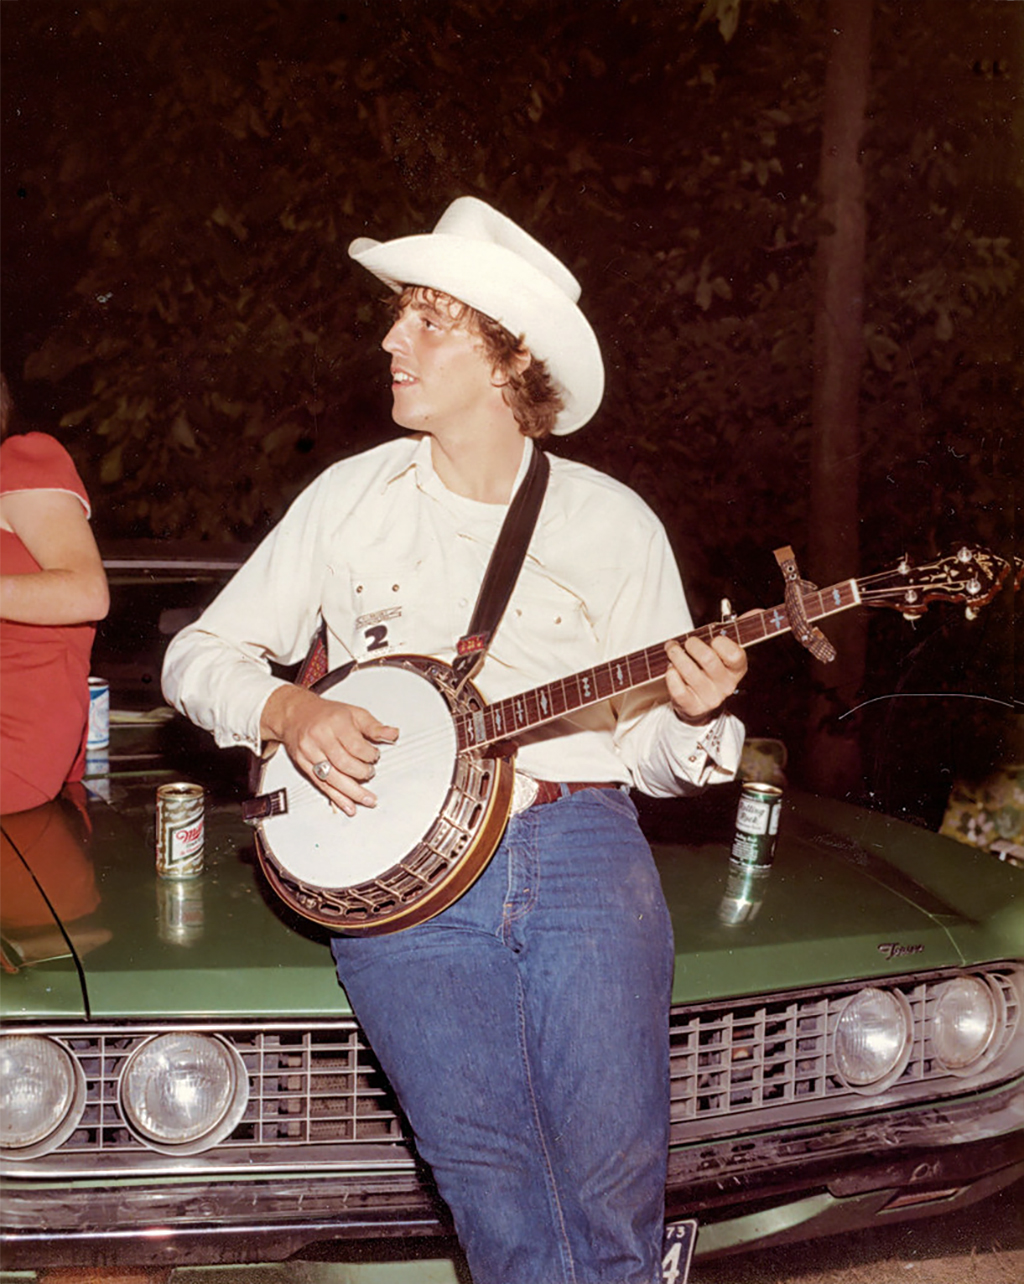 Gary McMullen playing banjo, 1970s. Copyright Wayne T. Helfrich